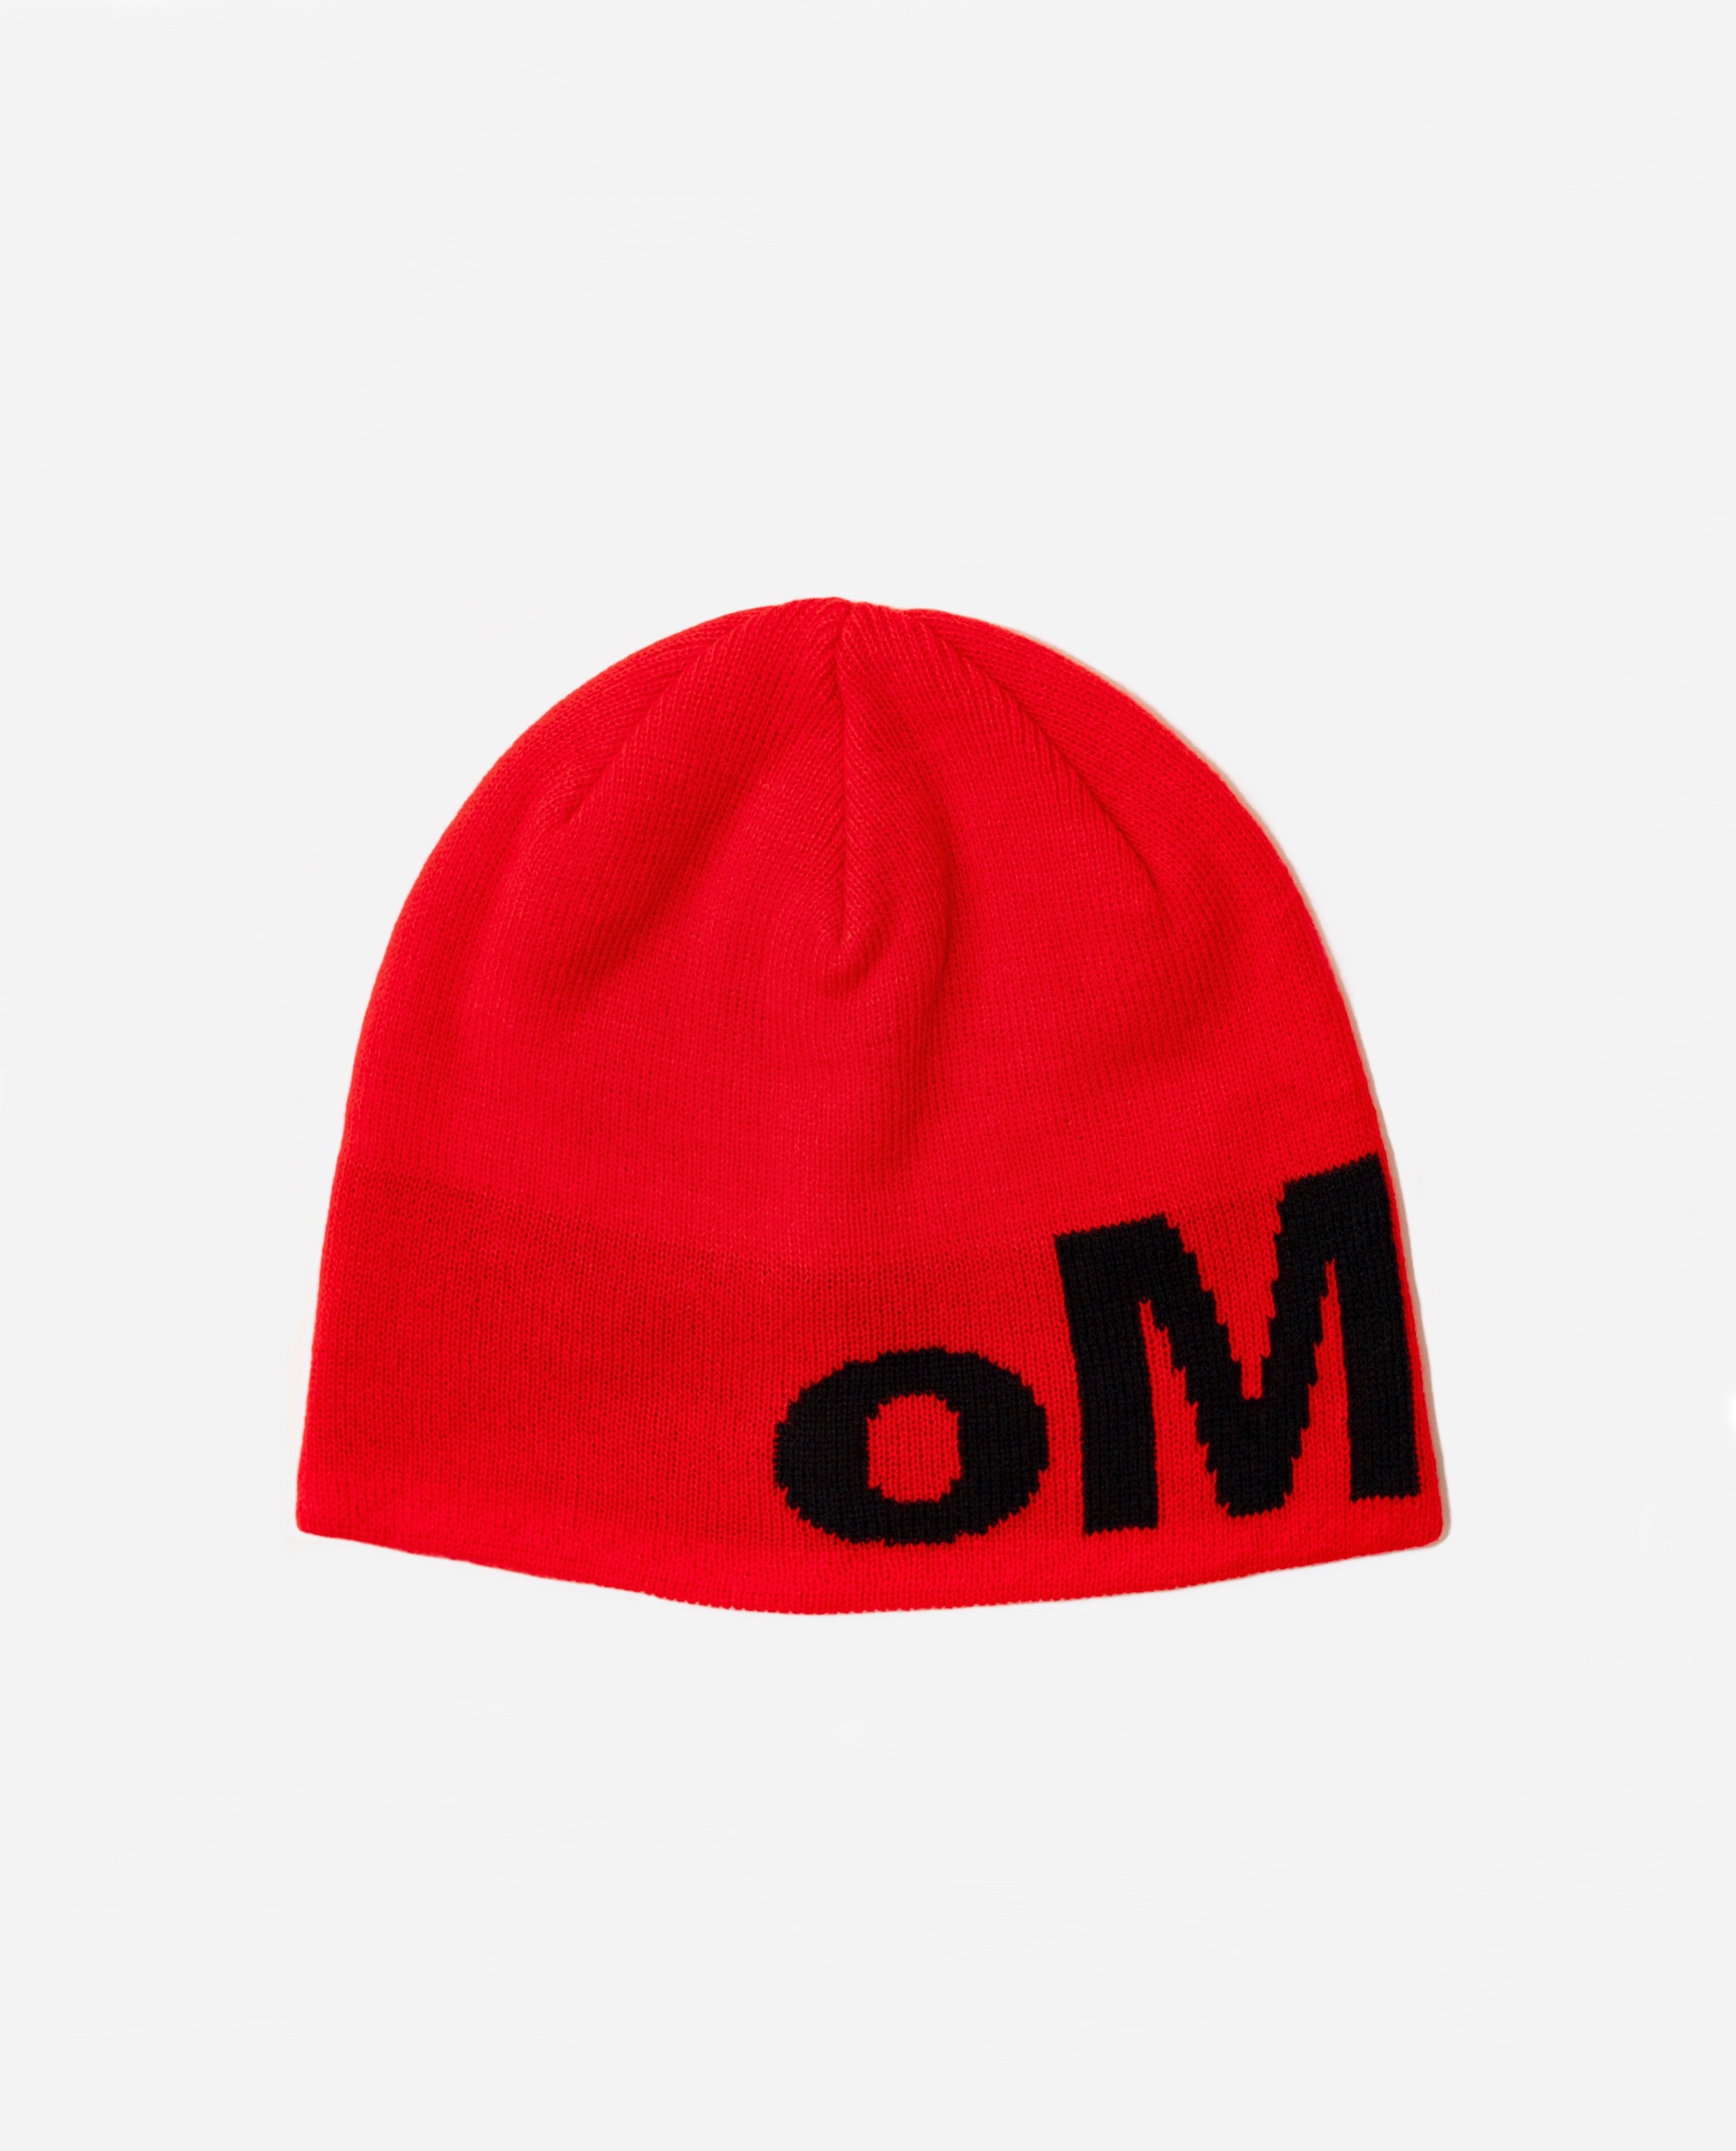 oMA LOGO SKULL CAP (FLAME RED)